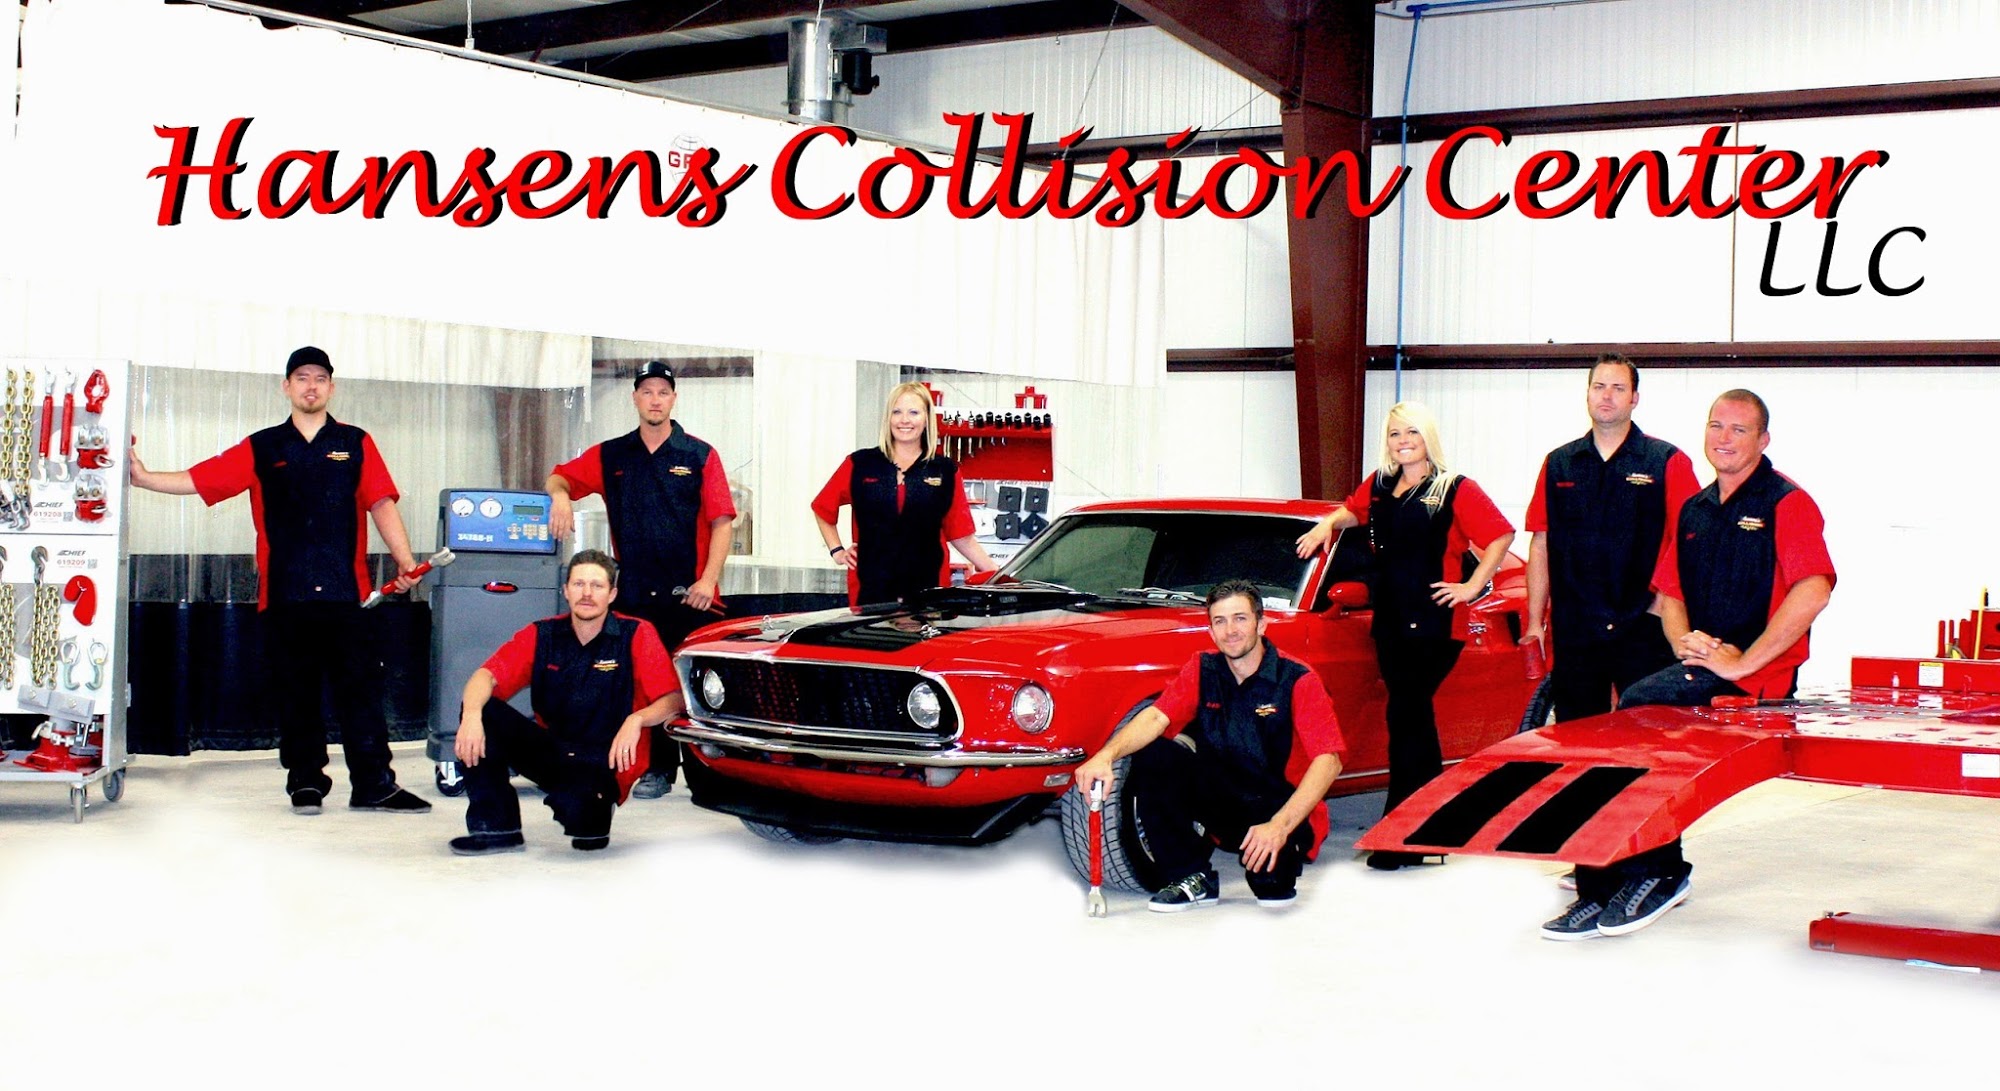 Hansens Collision Center LLC